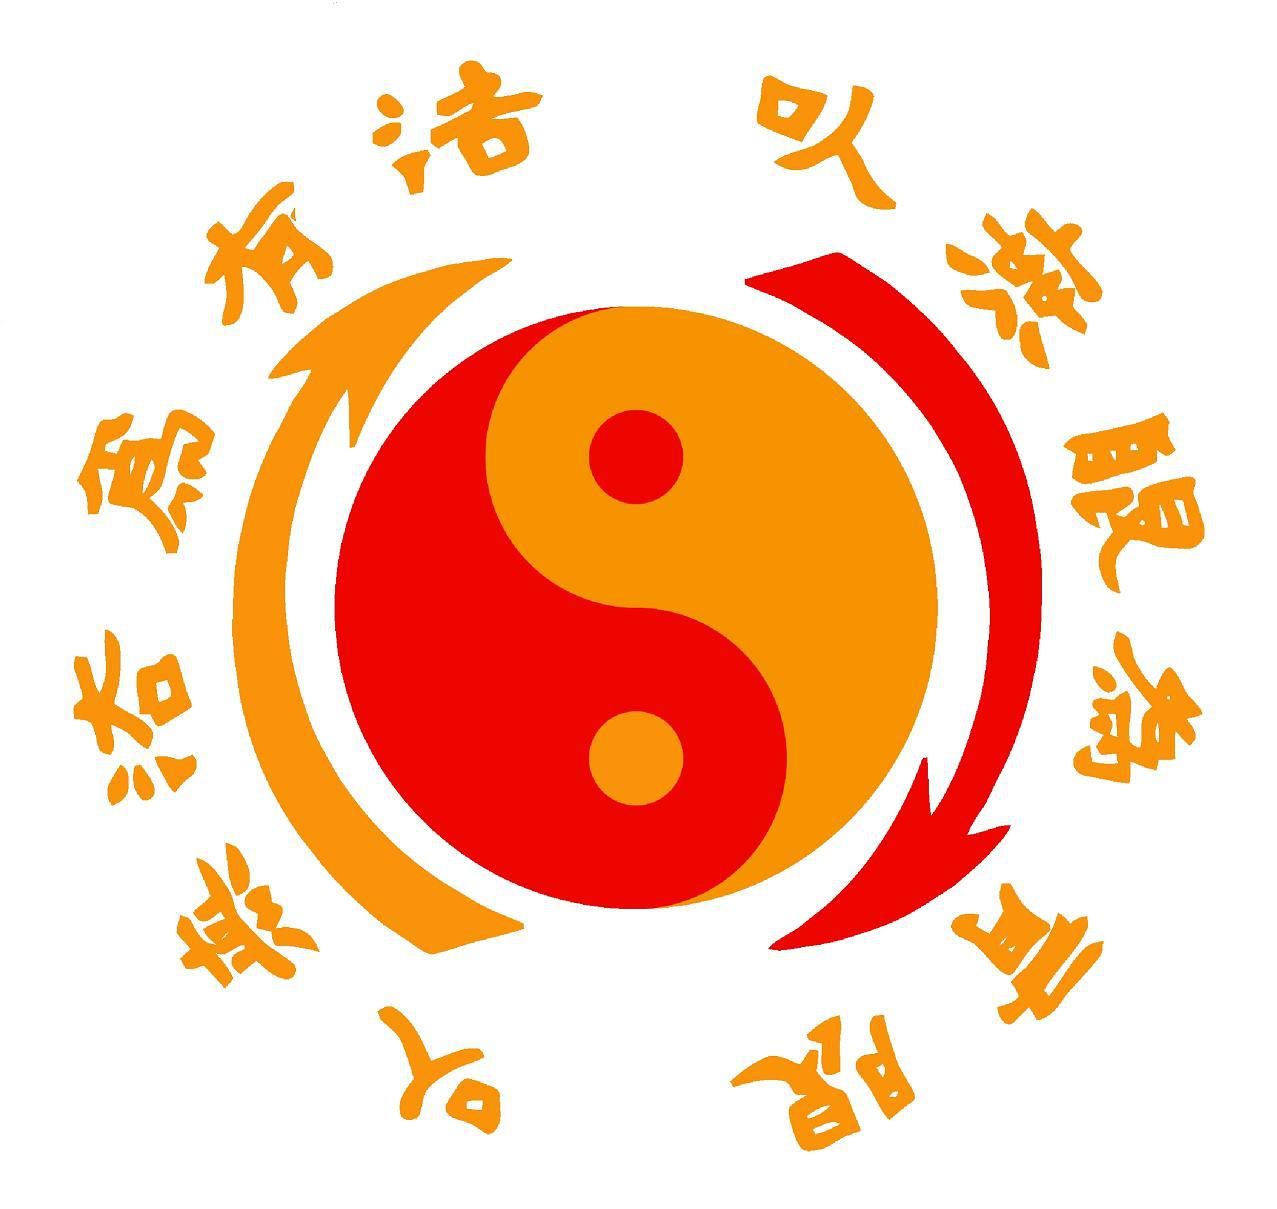 6.5) Bruce Lee's Jeet Kune Do logo. The .com